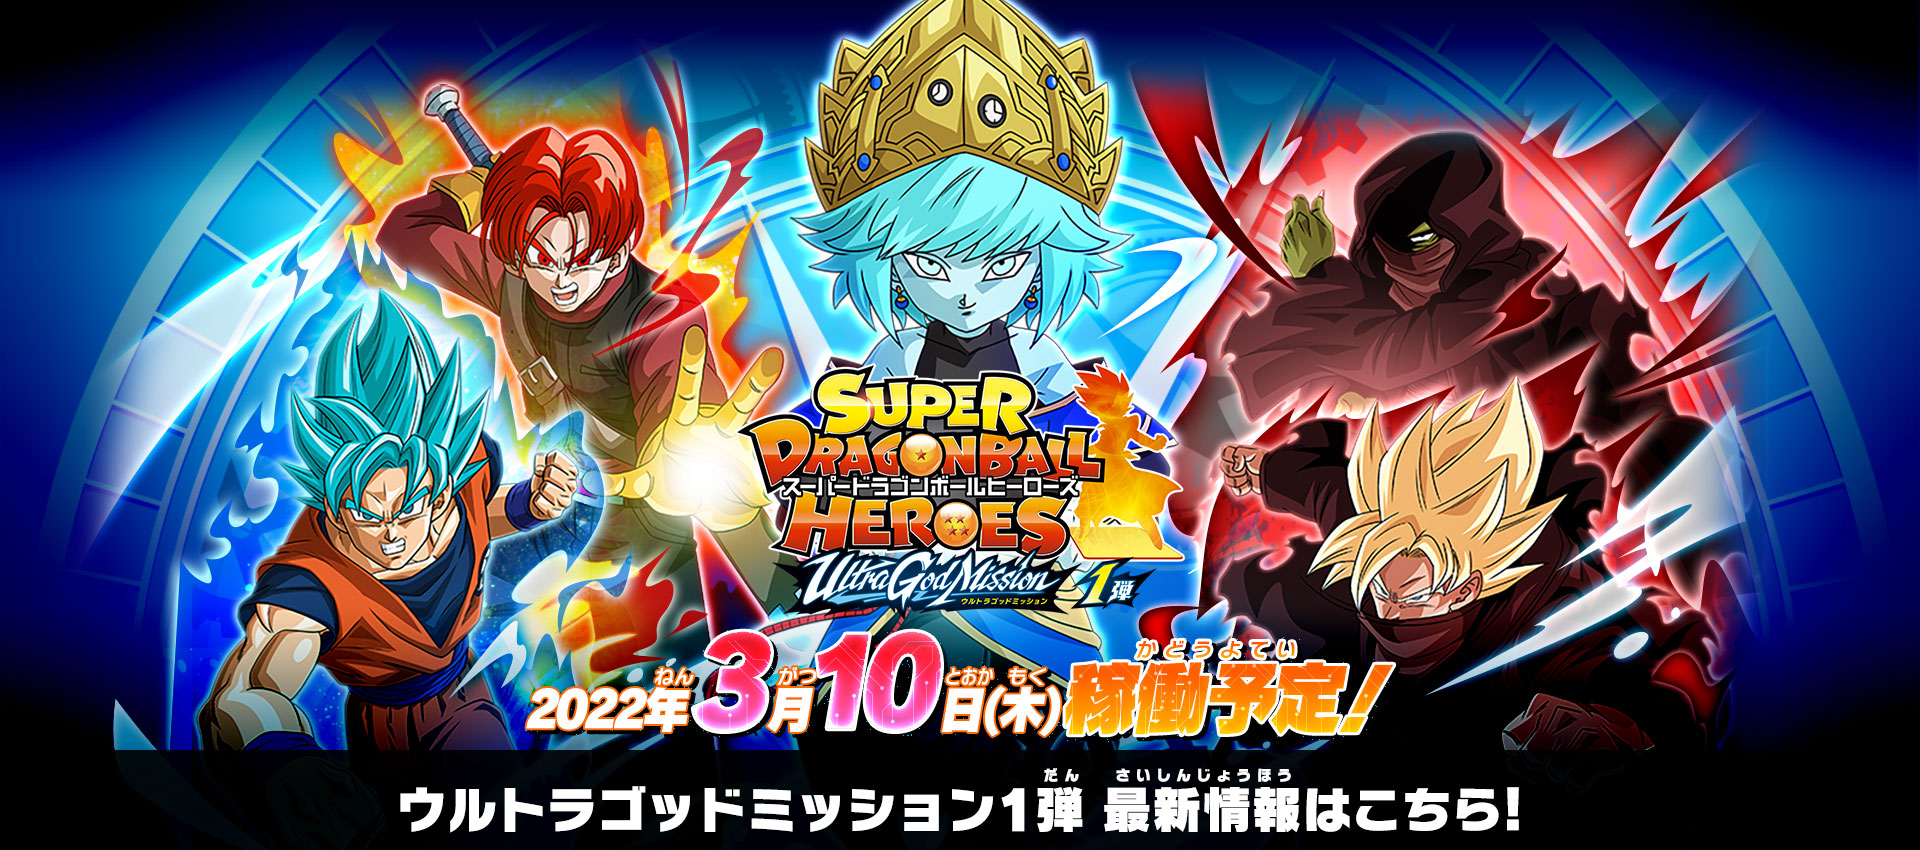 Super Dragon Ball Heroes: Ultra God Mission!!!! - MangaDex